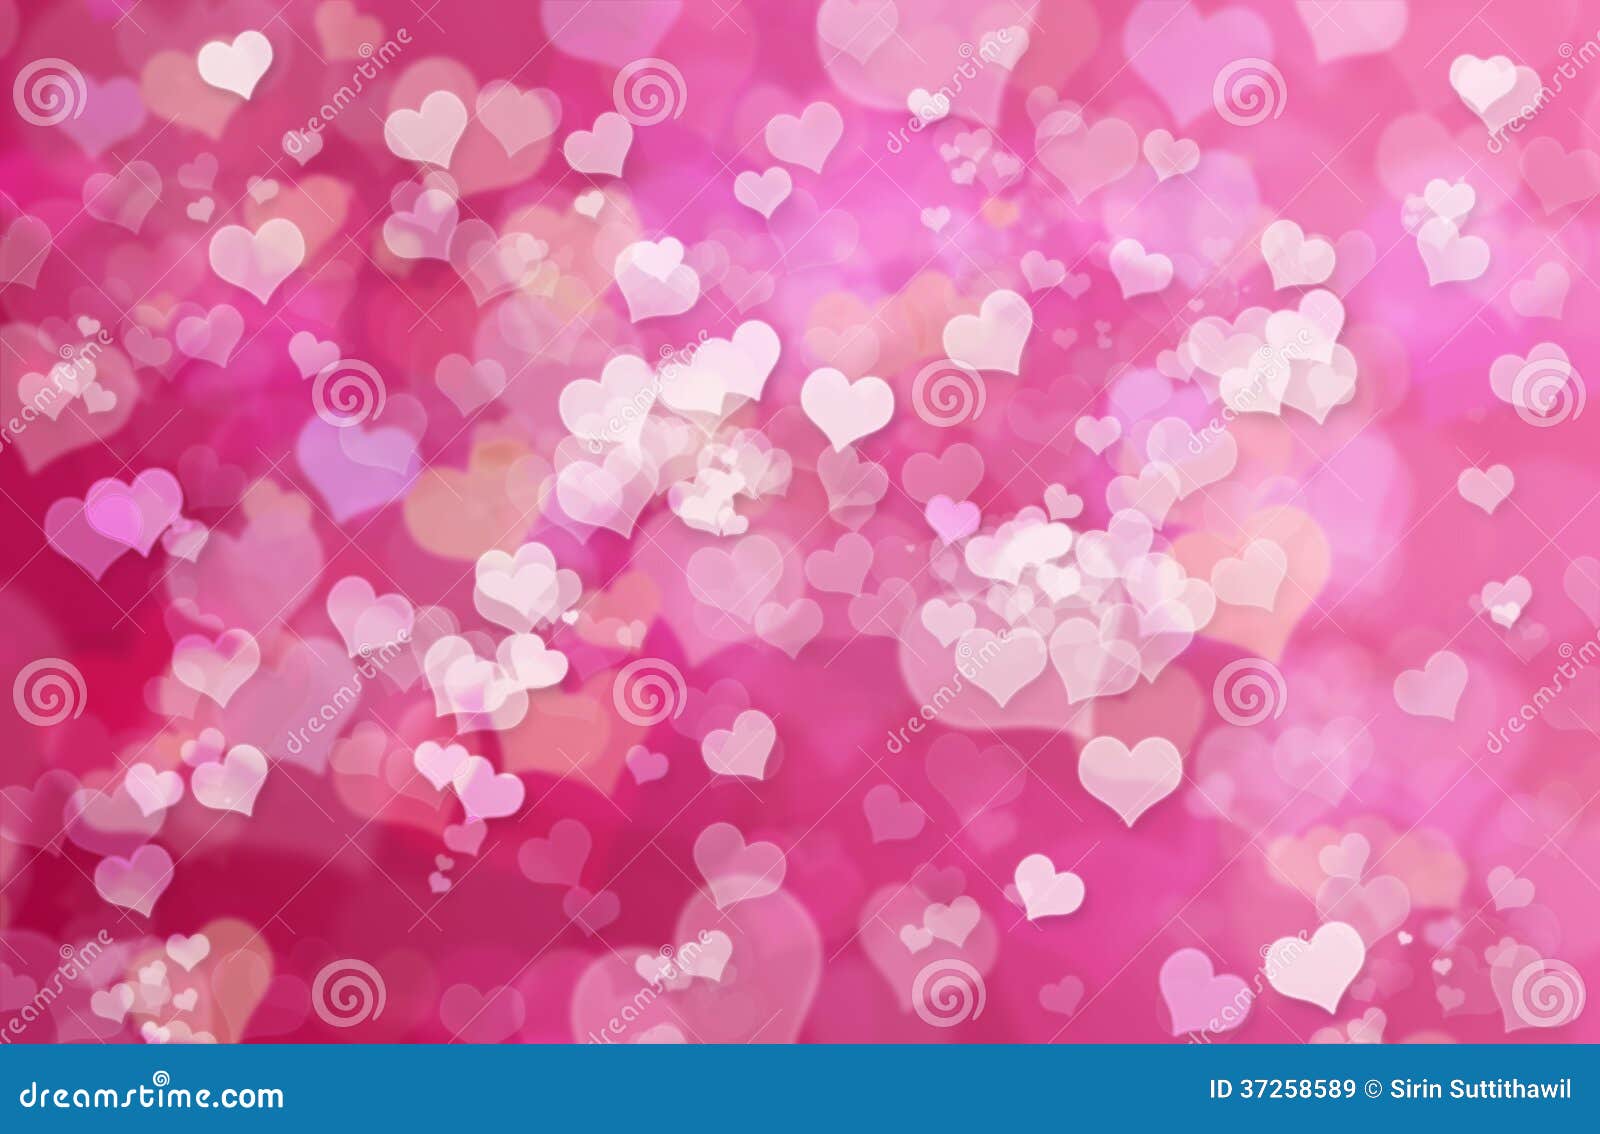 Valentine Hearts Abstract Pink Background : Valent Stock Illustration -  Illustration of purple, corazon: 37258589